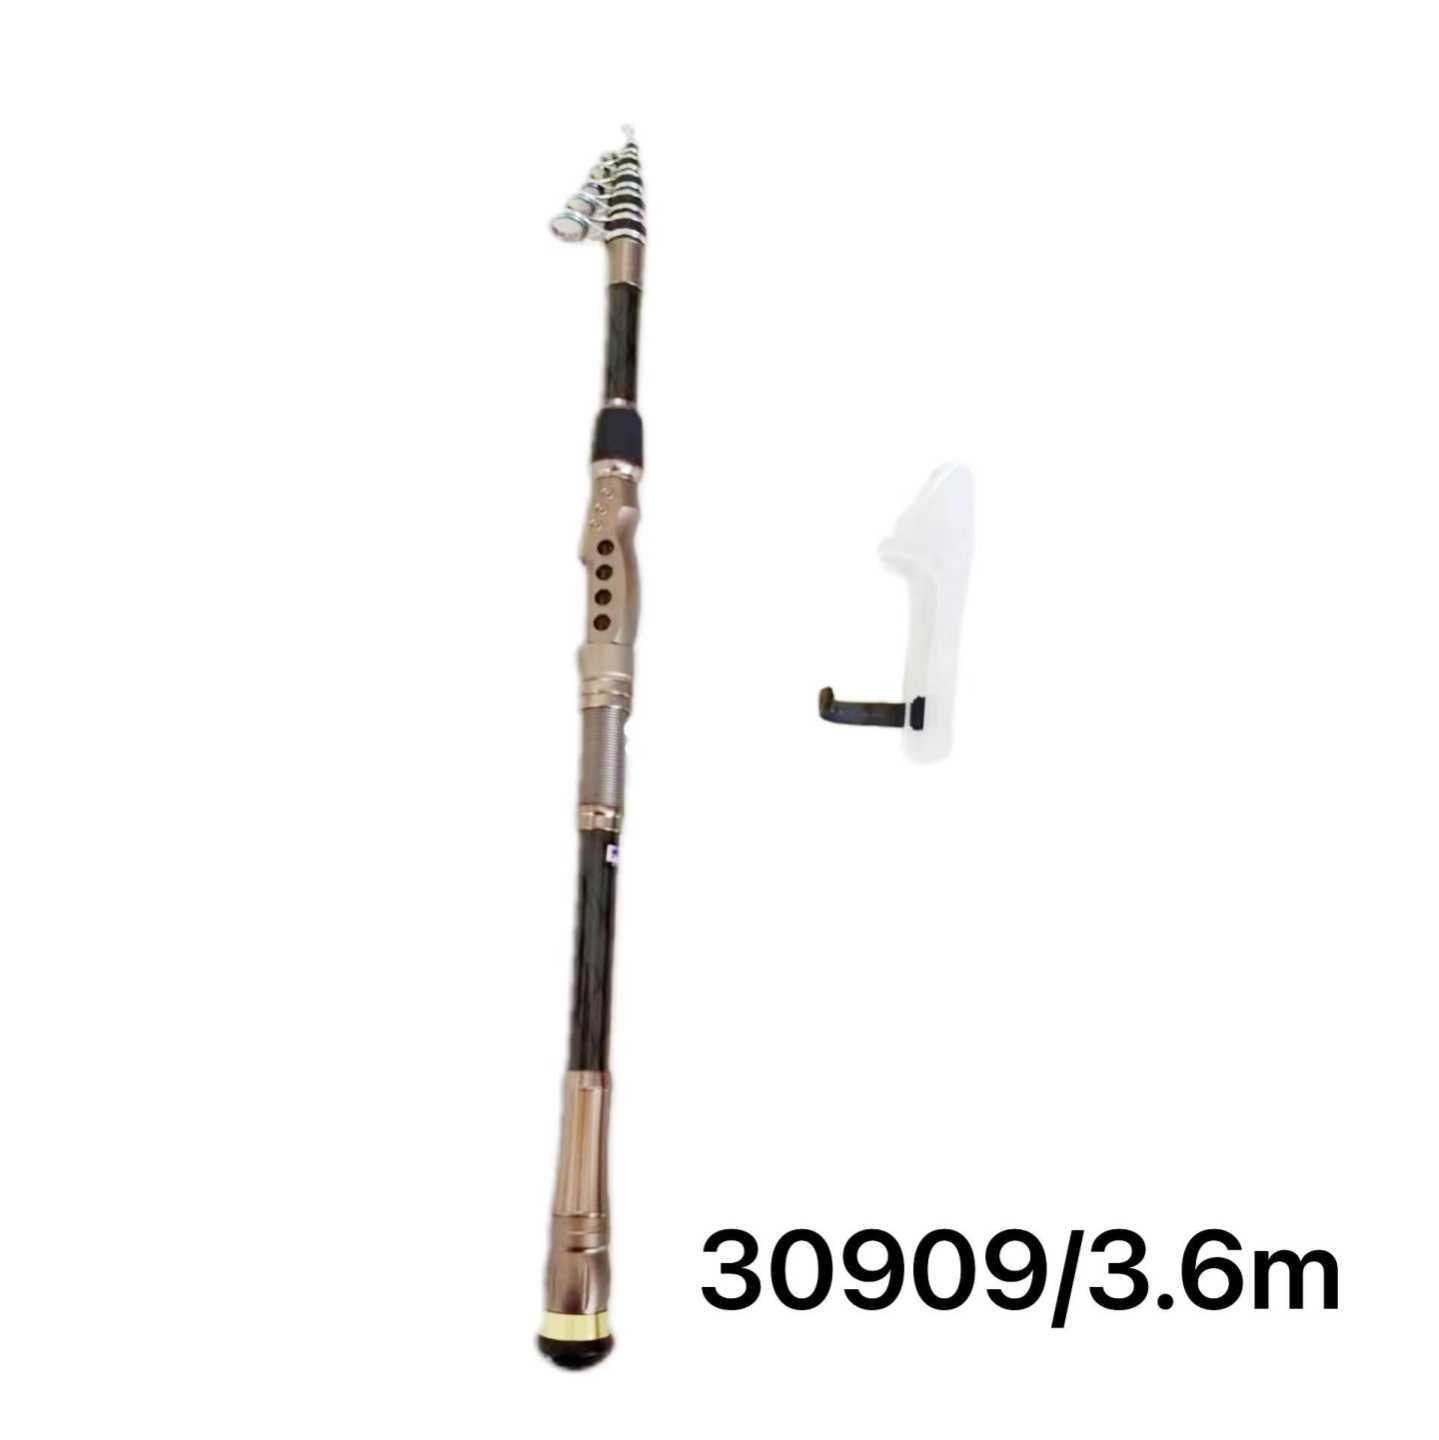 Fishing rod - Telescopic - 3.6m - 30909